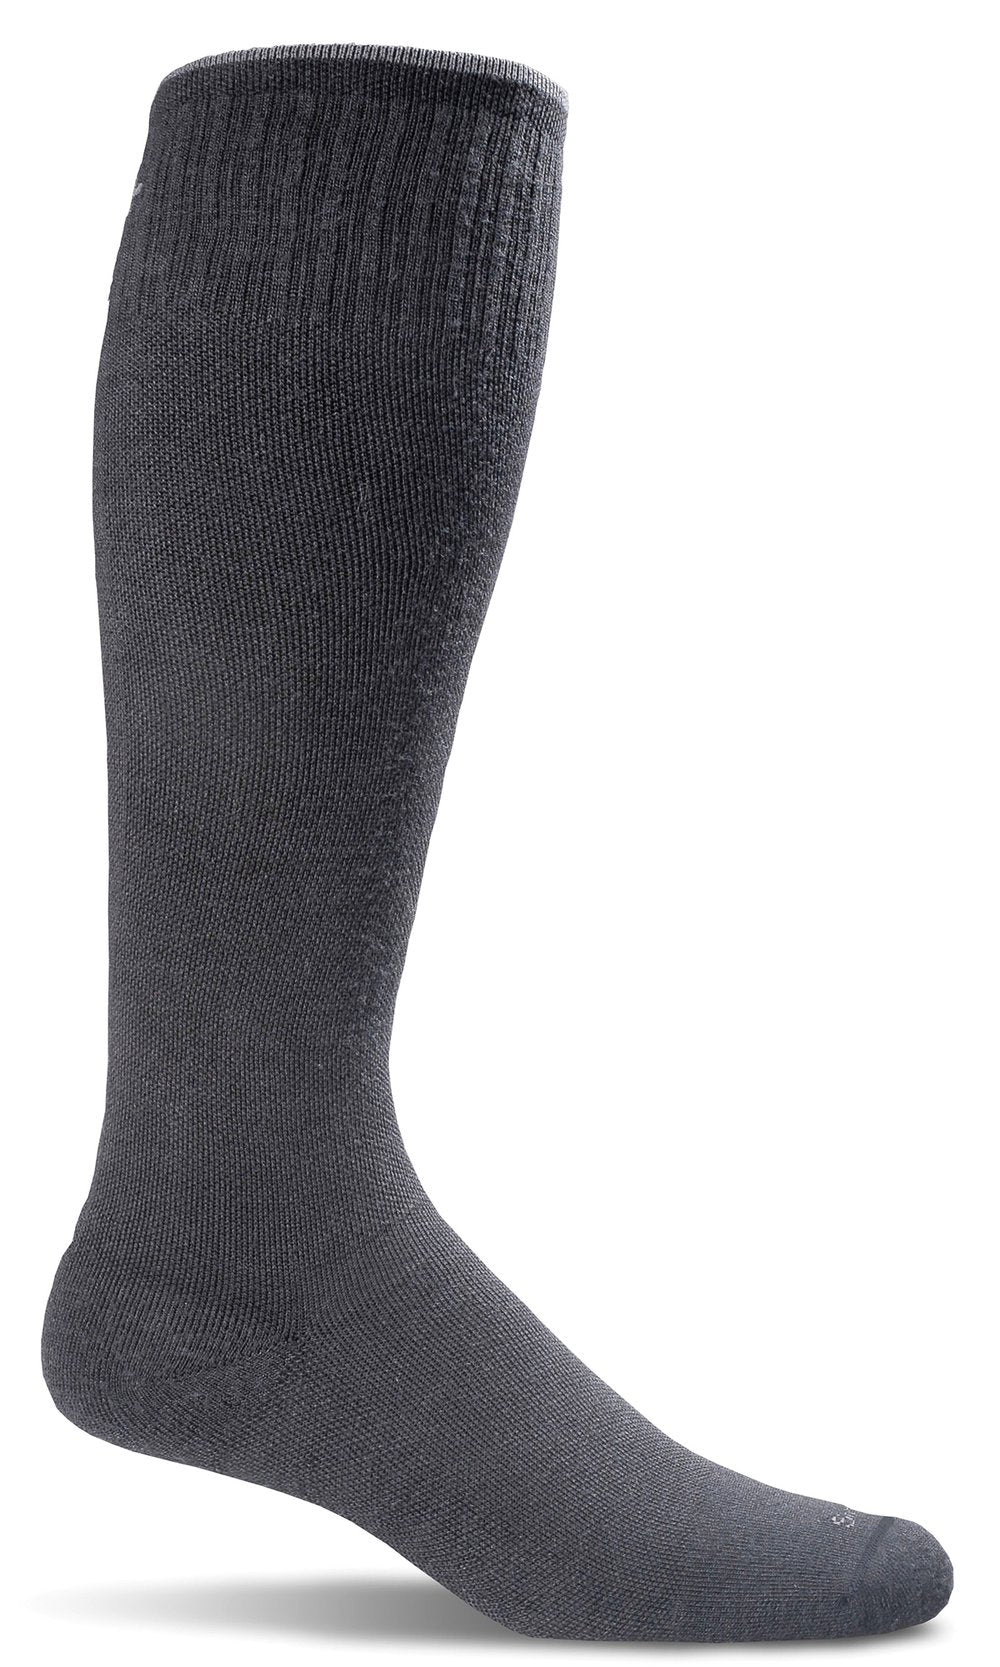 Black Graduated Compression Sock (Women's size scale)